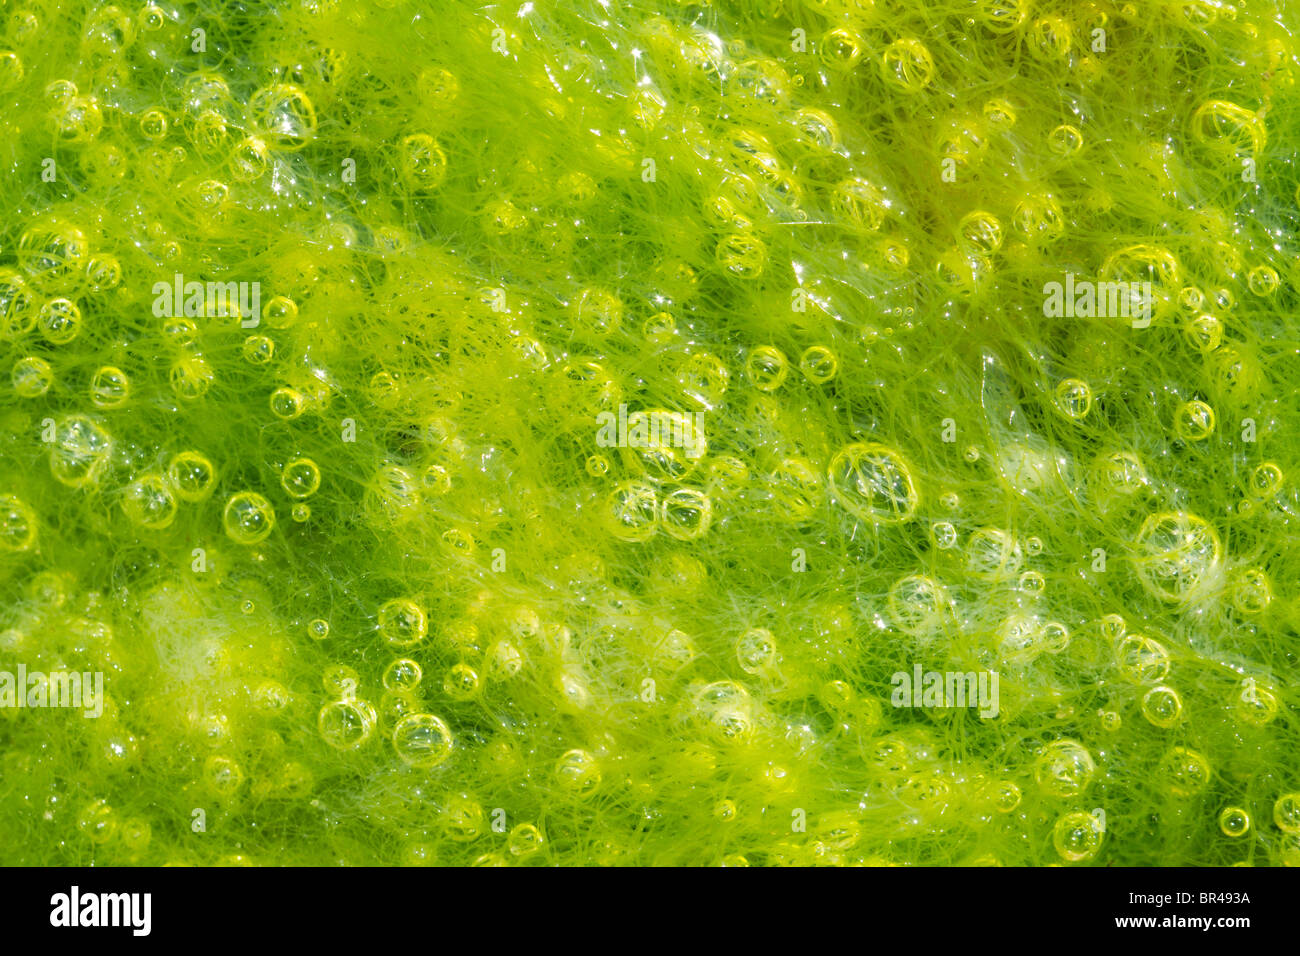 ulva alga background with bubbles at low tide Stock Photo